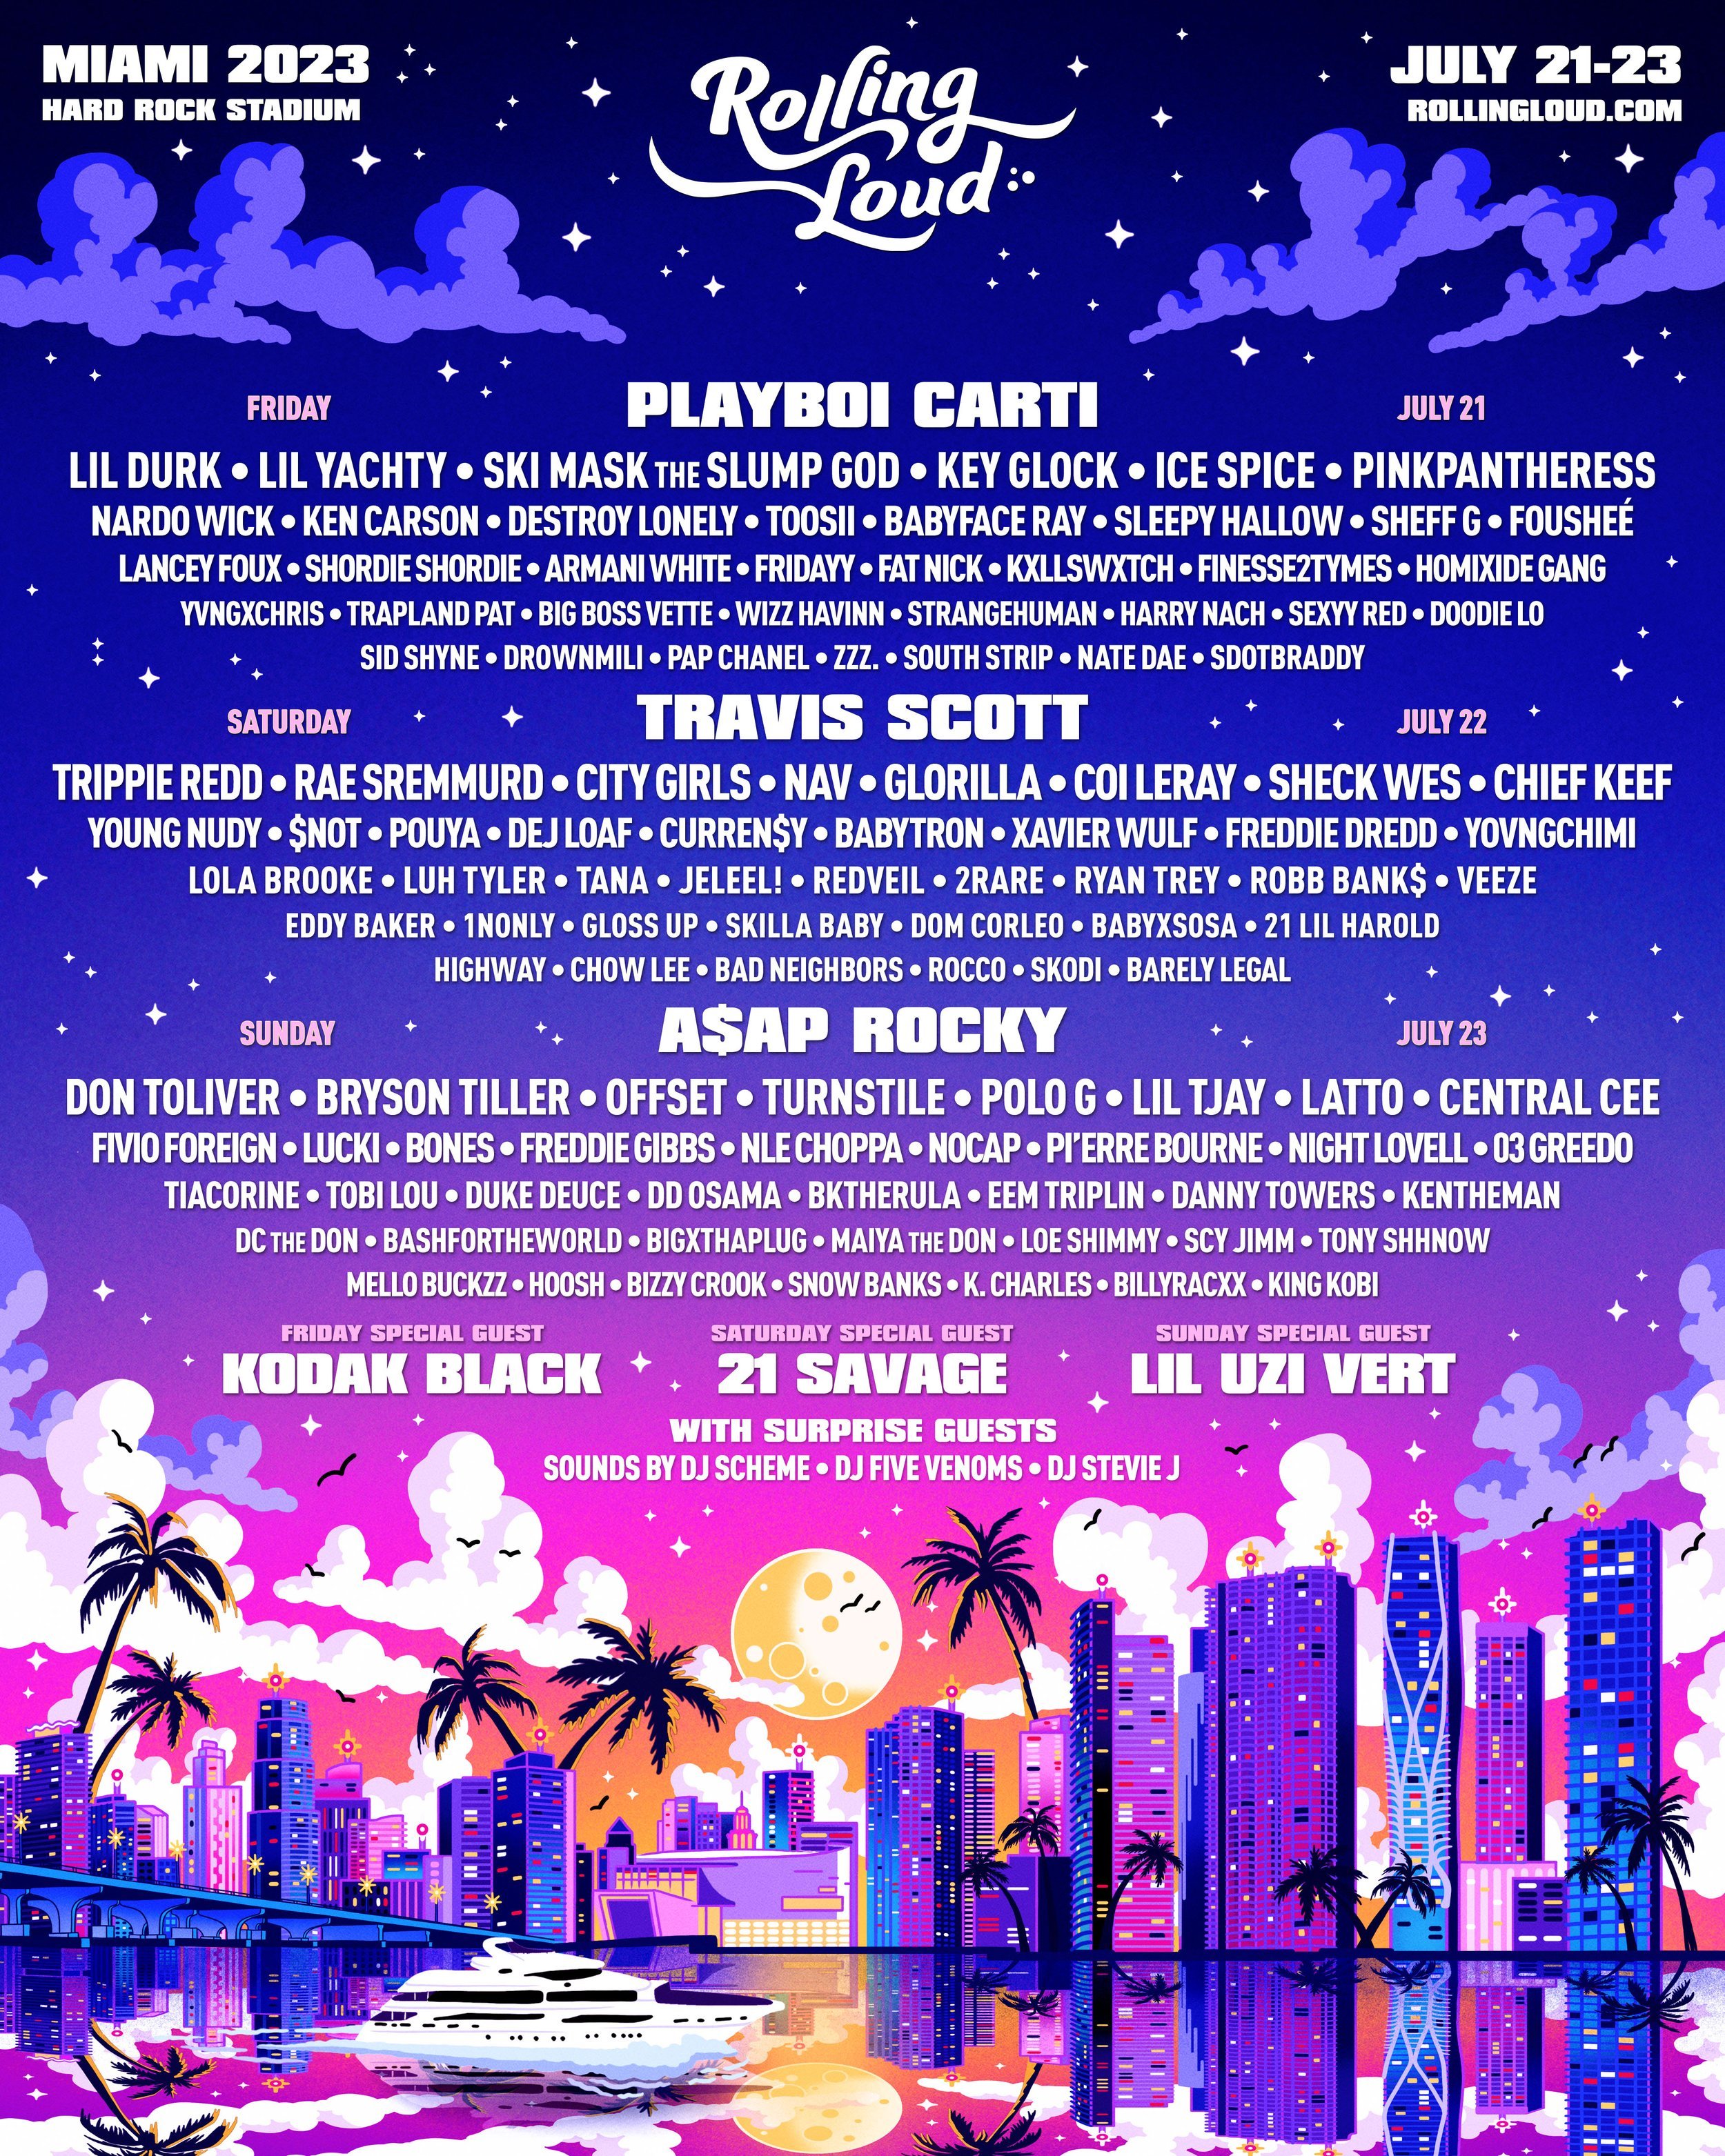 Summer Smash Festival Announced with Kid Cudi, Future, Playboi Carti